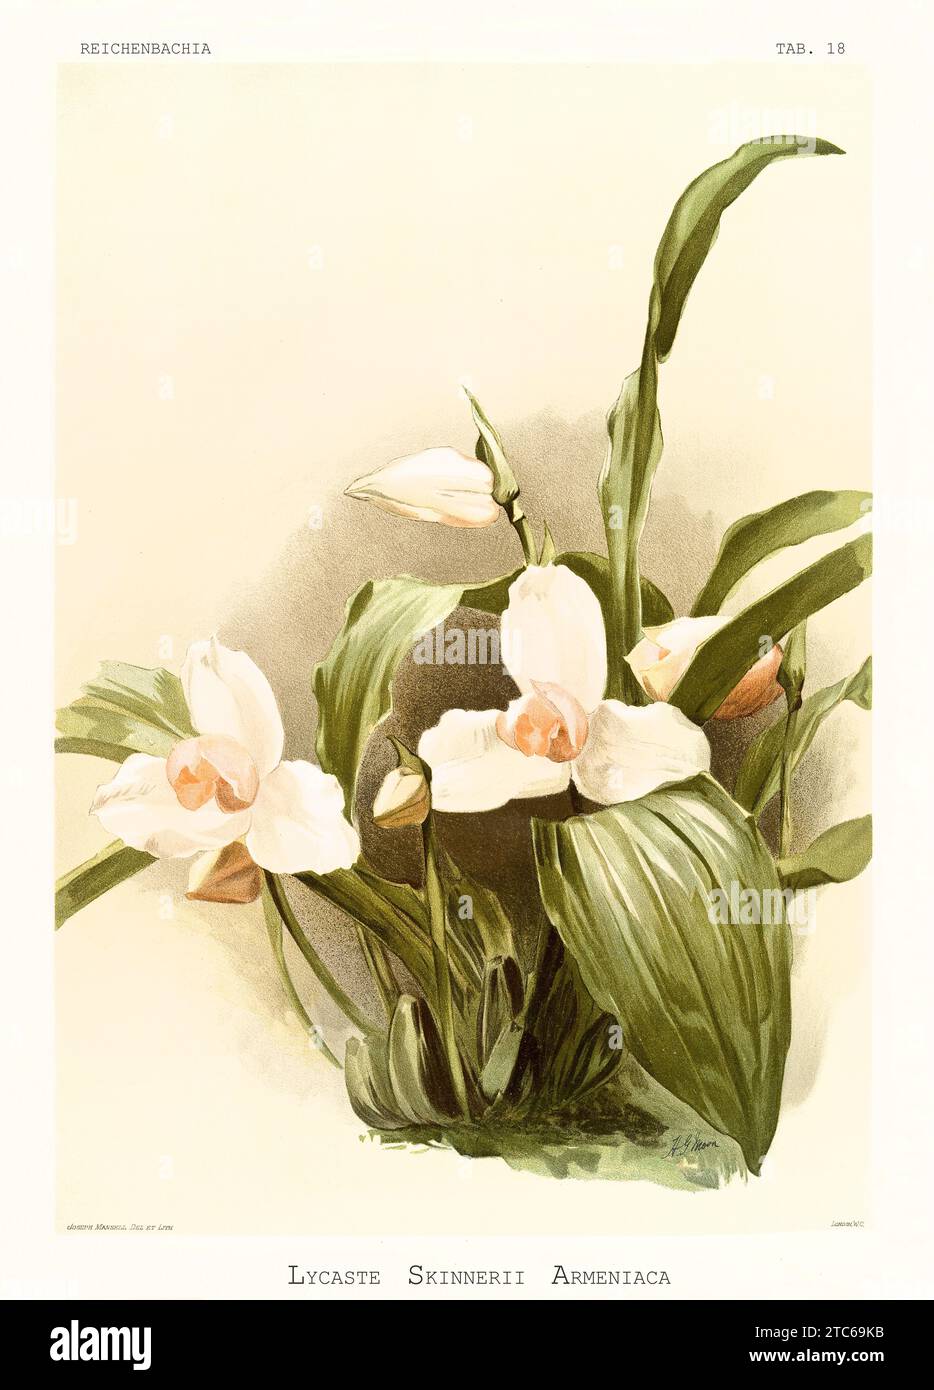 Old illustration of  White Nun Orchid (Lycaste skinneri). Reichenbachia, by F. Sander. St. Albans, UK, 1888 - 1894 Stock Photo